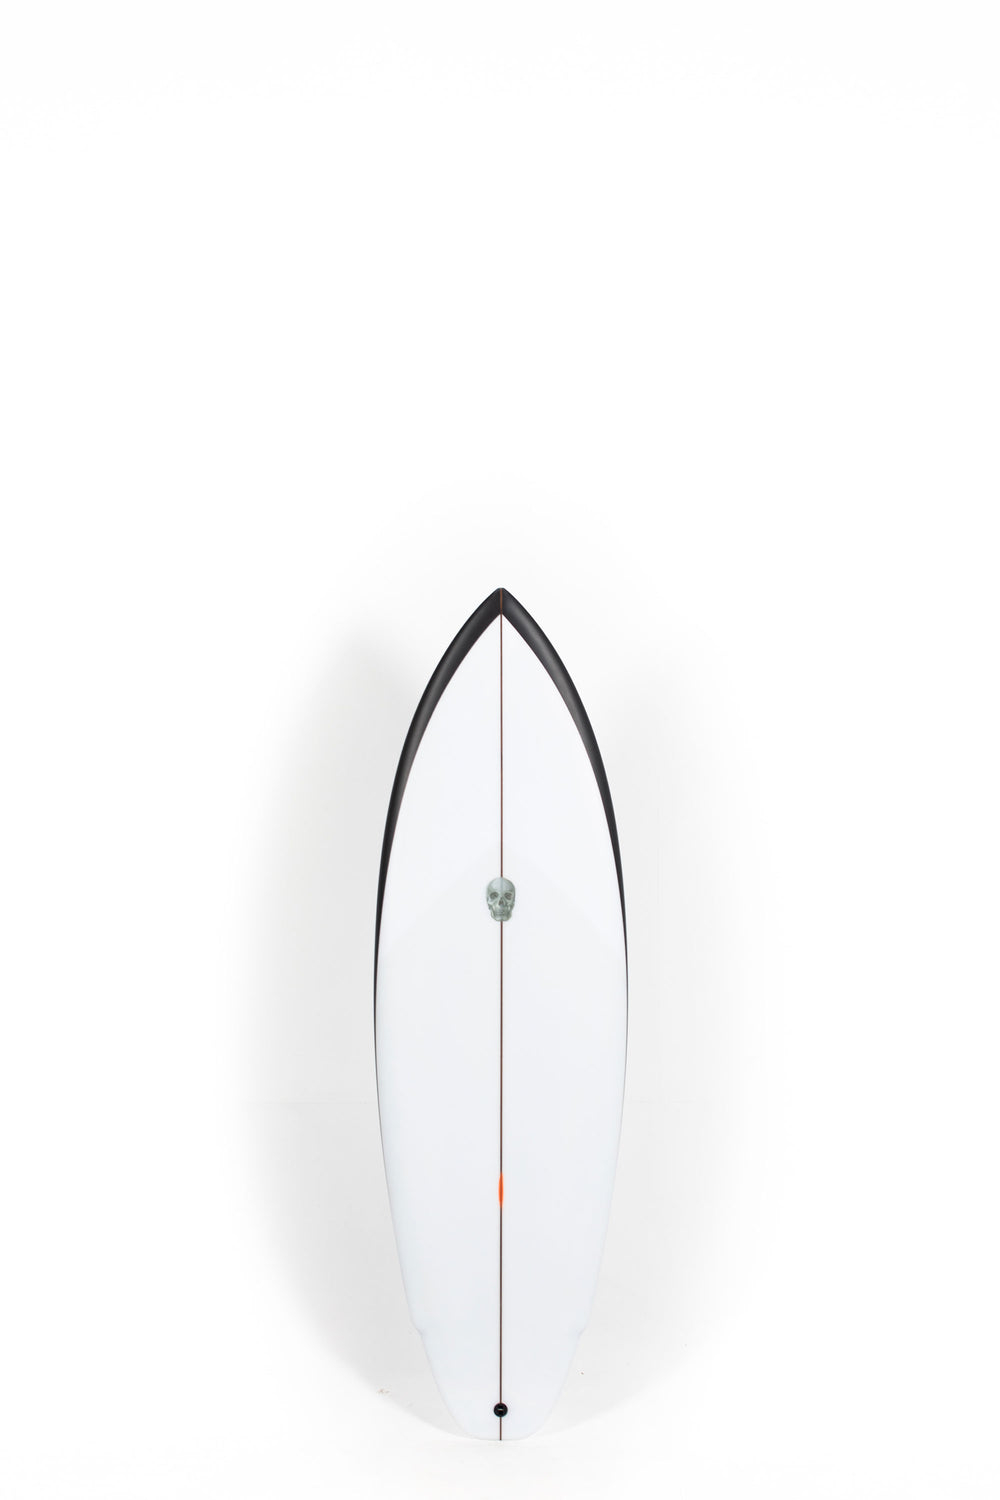 Pukas Surf Shop - Christenson Surfboards - LANE SPLITTER - 5'4